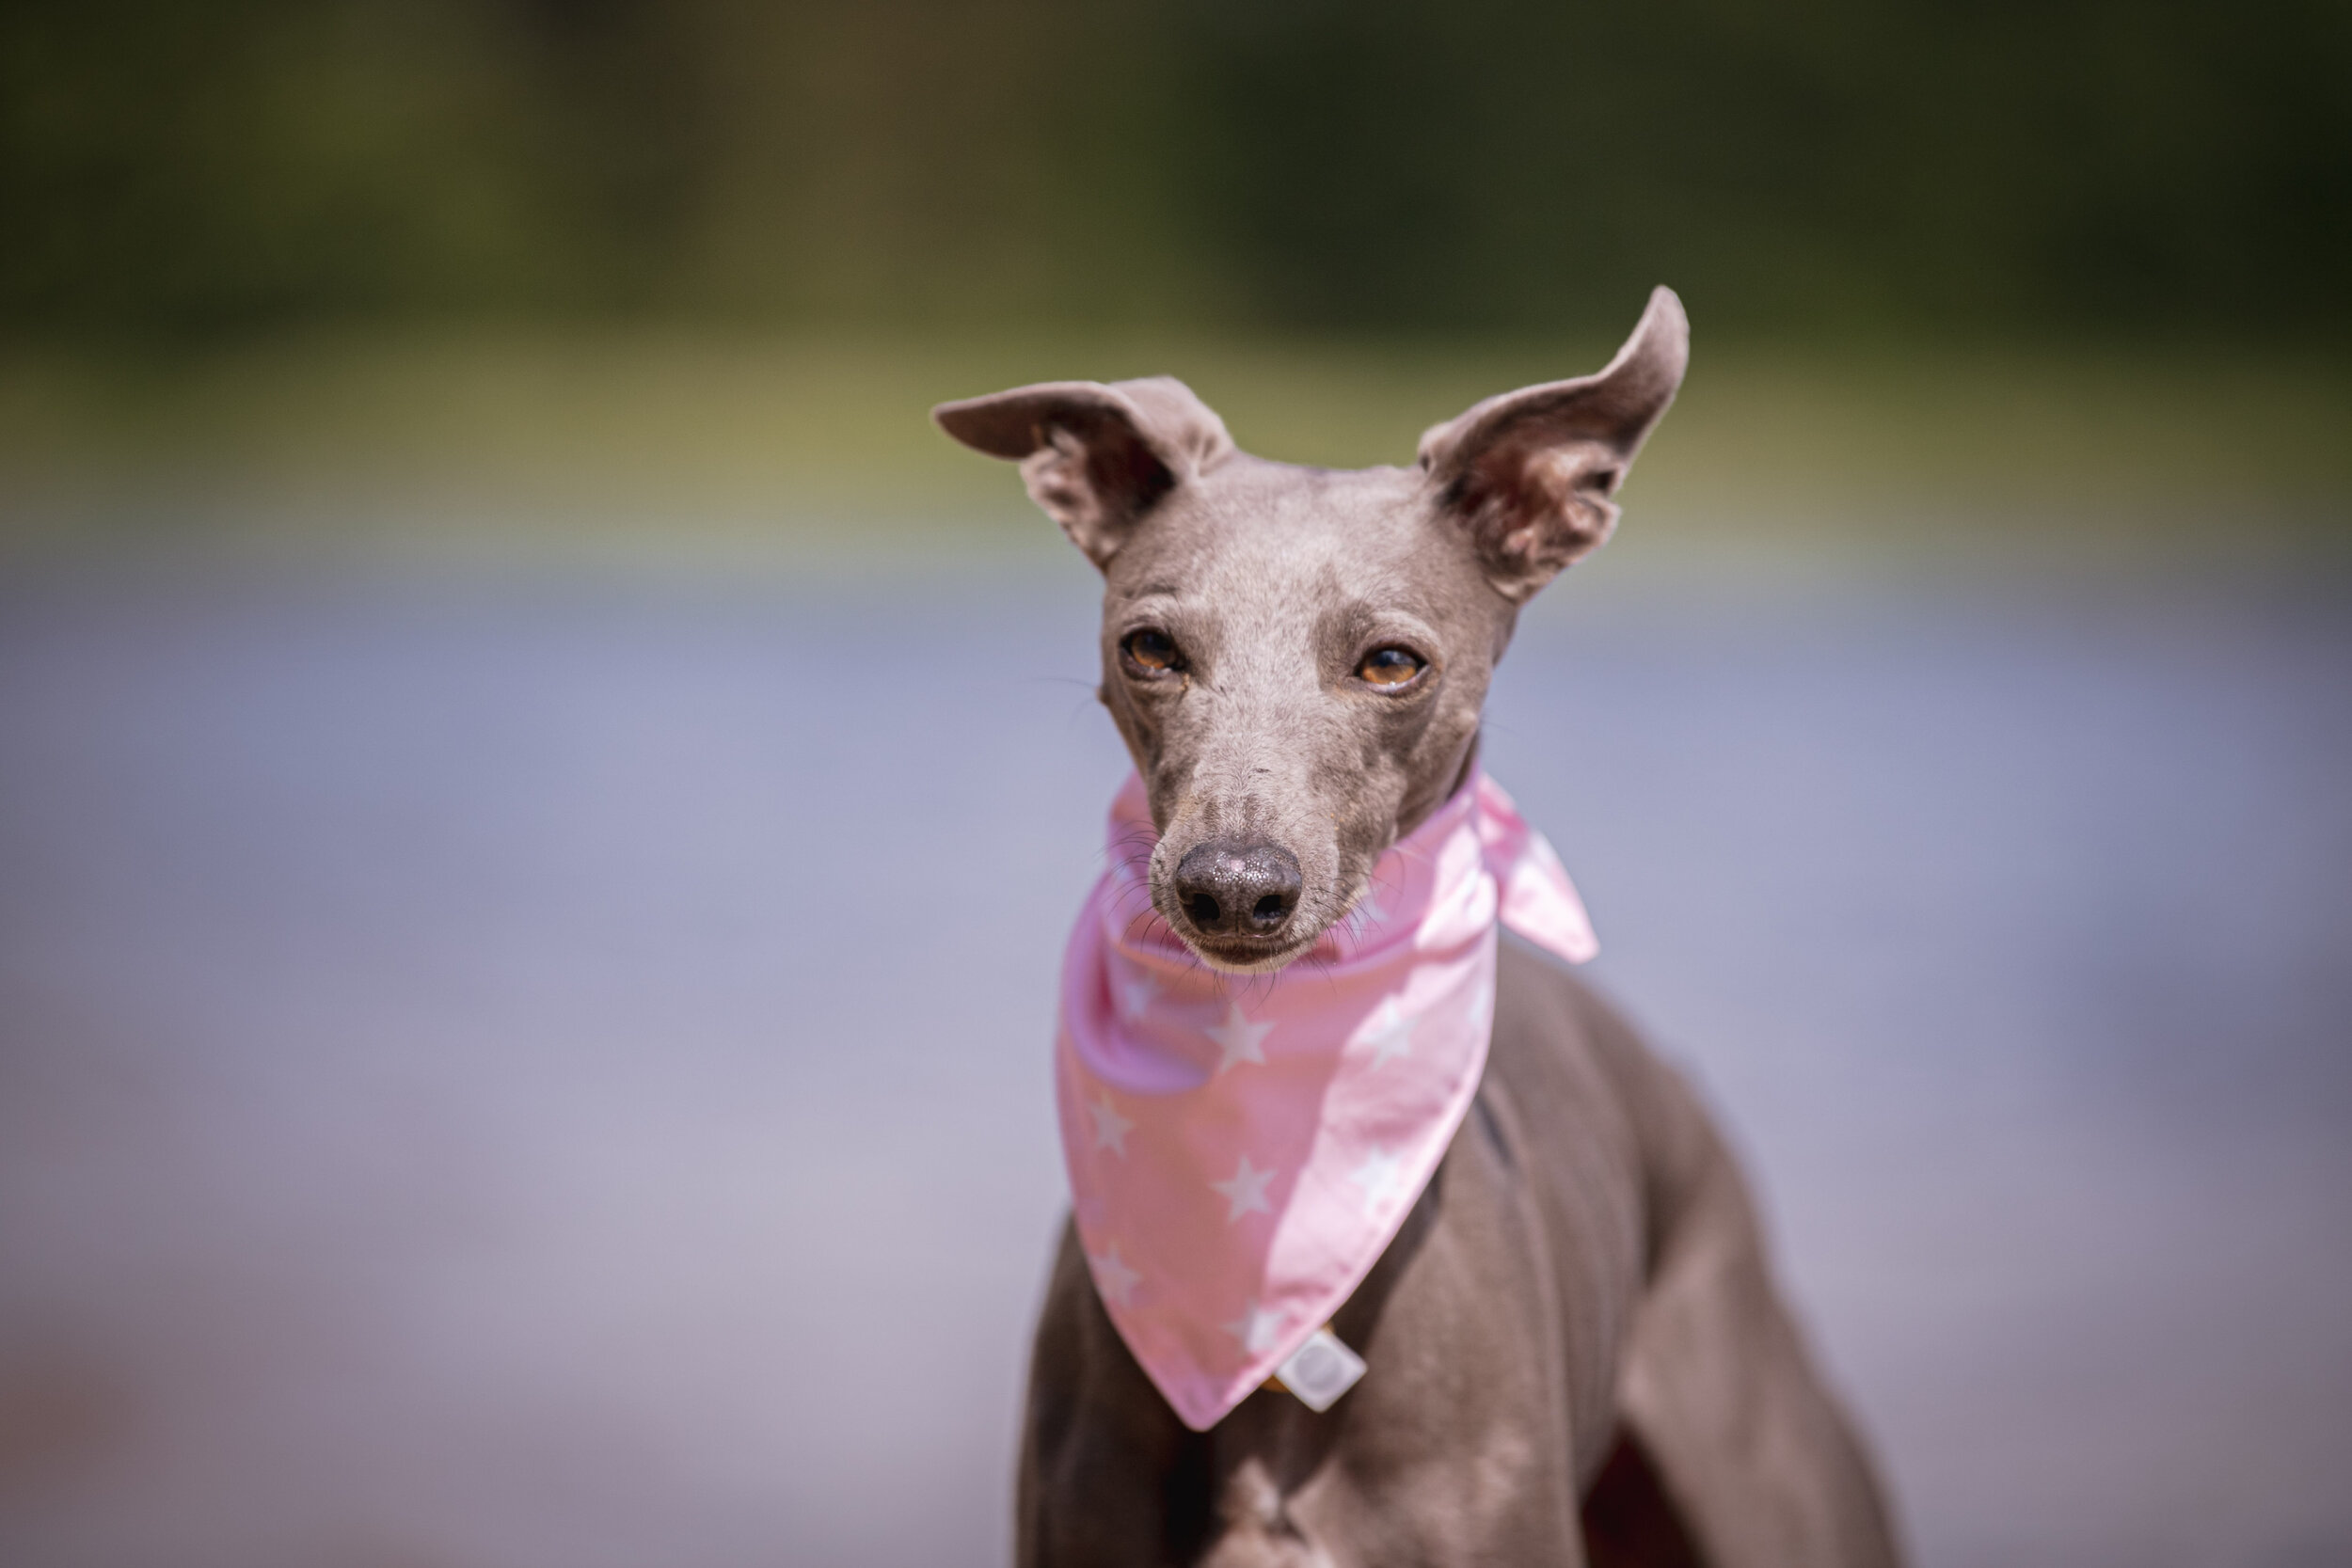 Penny // Dog bandana with pink leo - Hunnishop